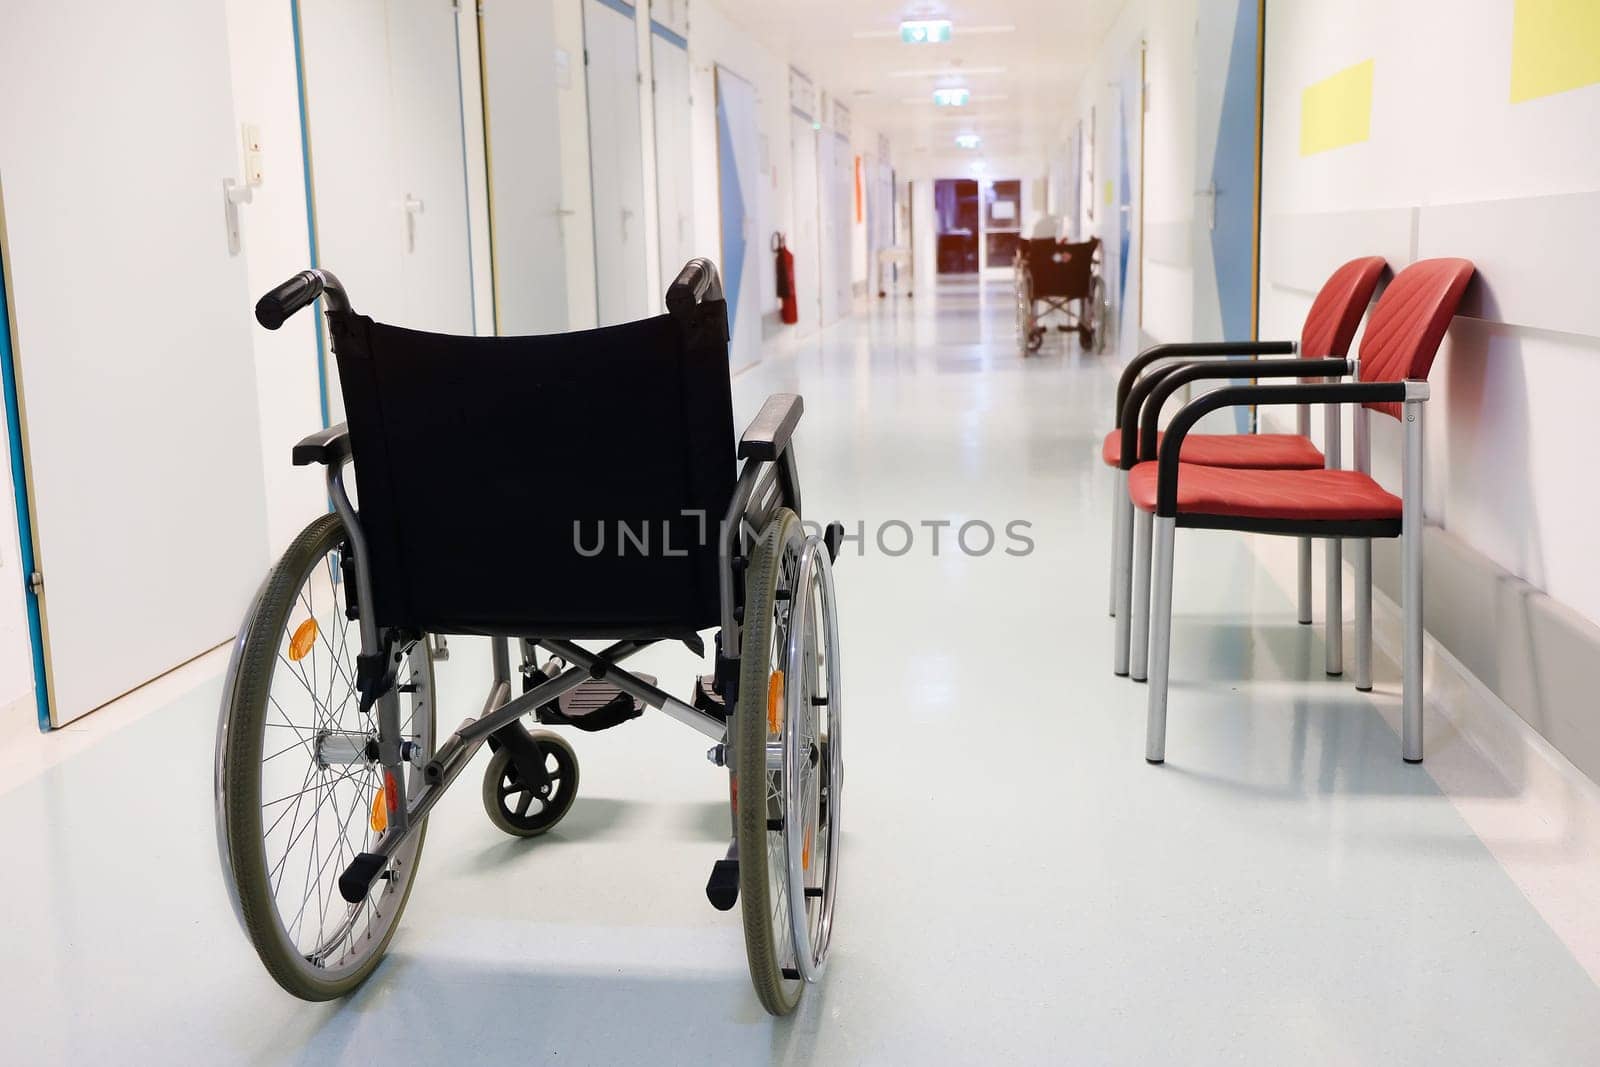 Wheel chair in the hospital corridor. Healthcare concept by Shablovskyistock